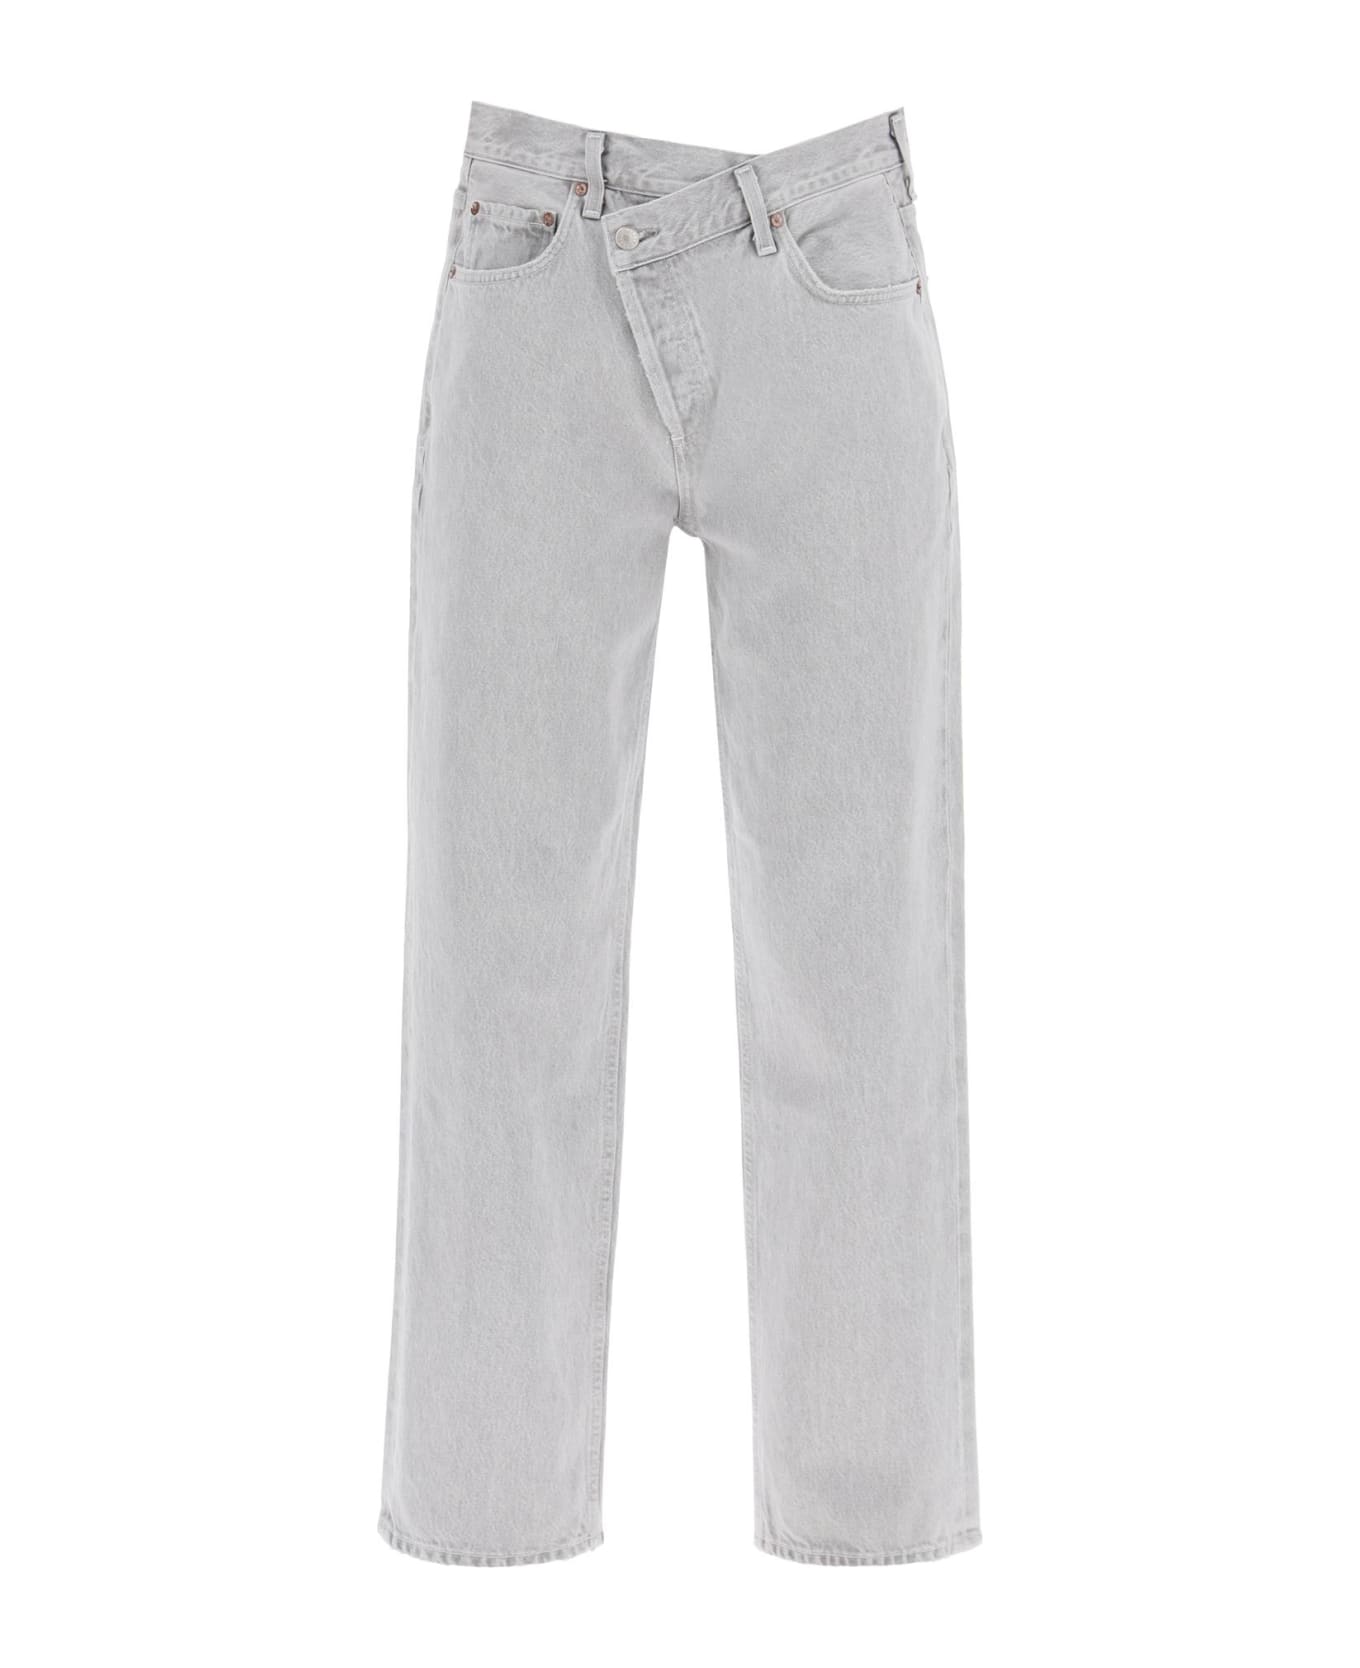 AGOLDE Criss Cross Jeans - RAIN (Grey)